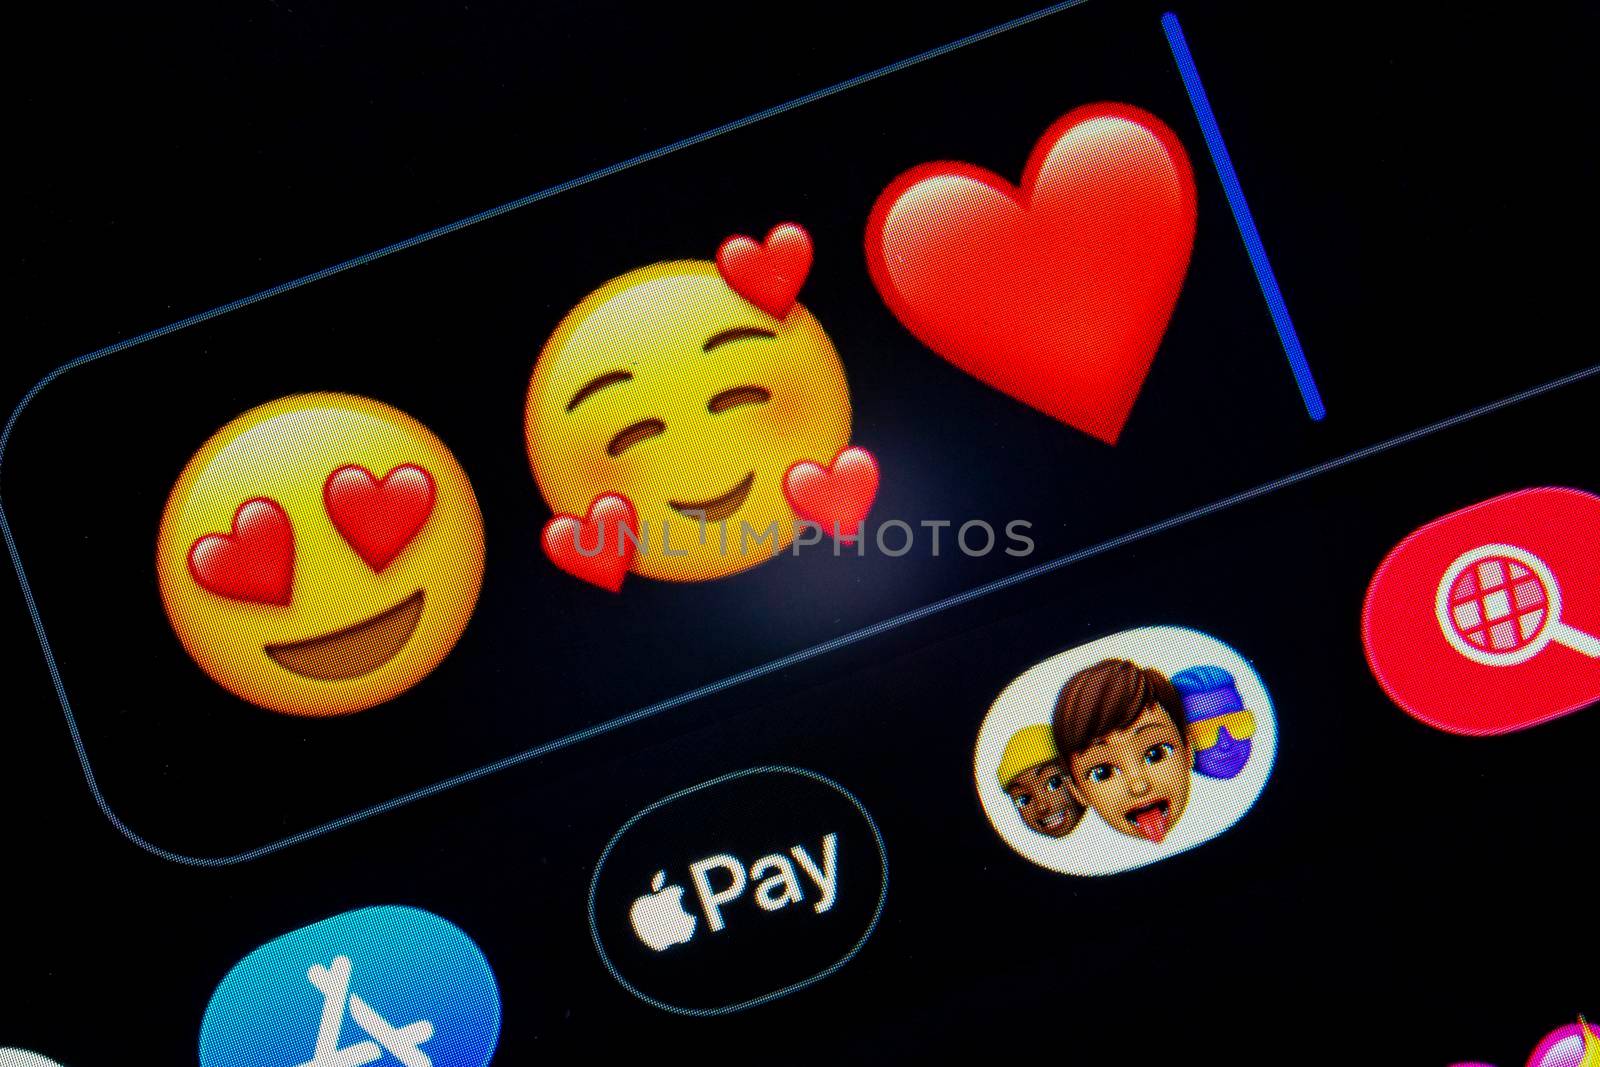 Calgary, Alberta. Canada Dec 29 2019. Saint Valentine's Day most popular emojis. The Most Romantic Valentine's Day emojis. Illustrative by oasisamuel